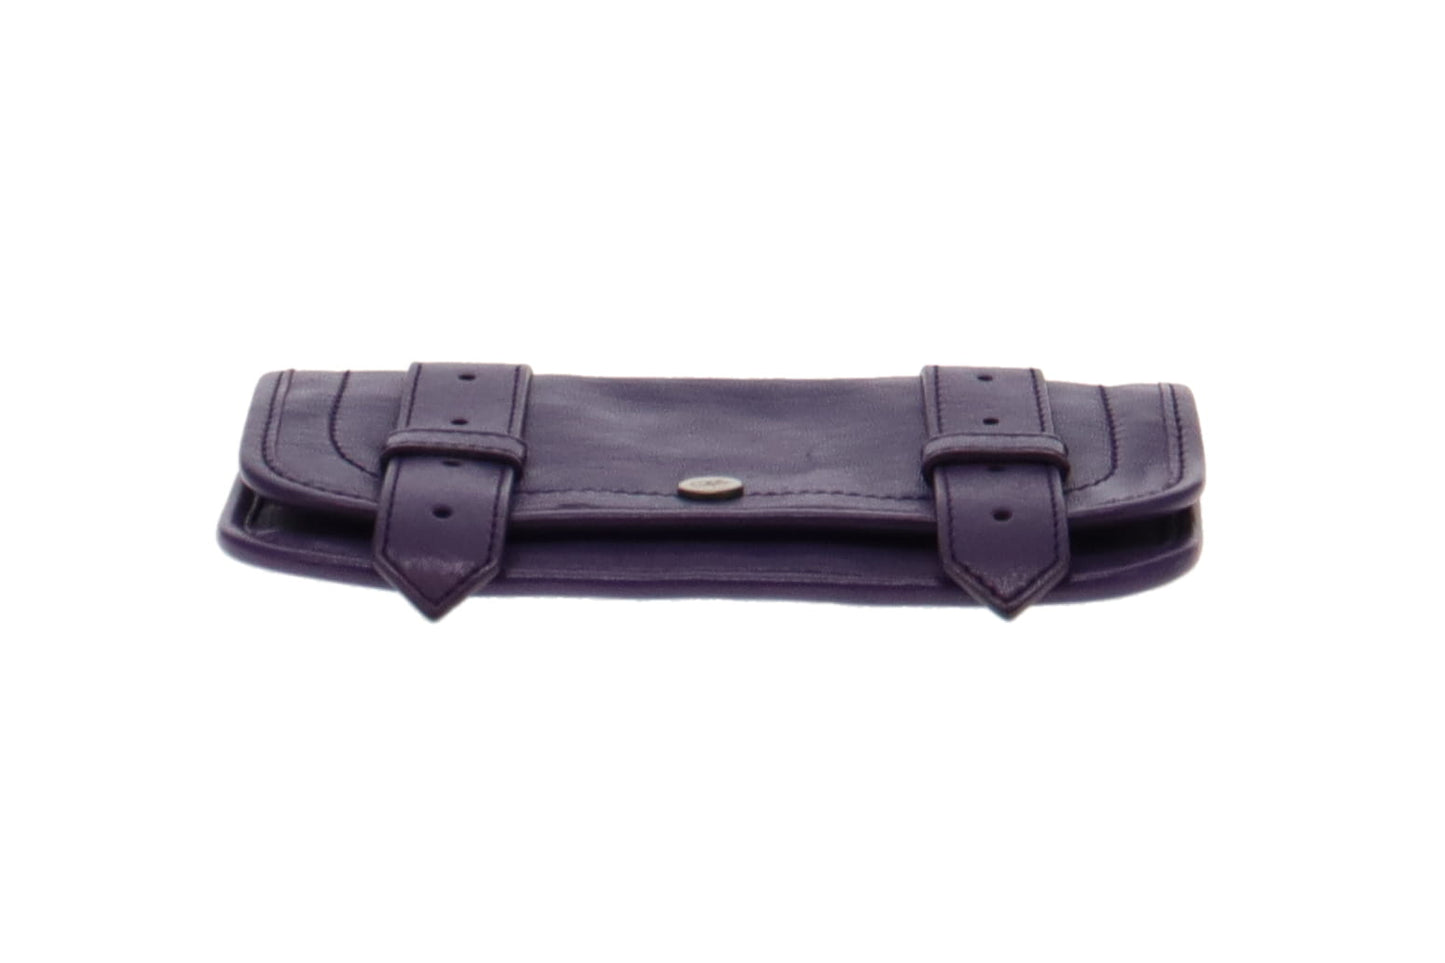 Proenza Schouer Violet Lux Leather Wallet